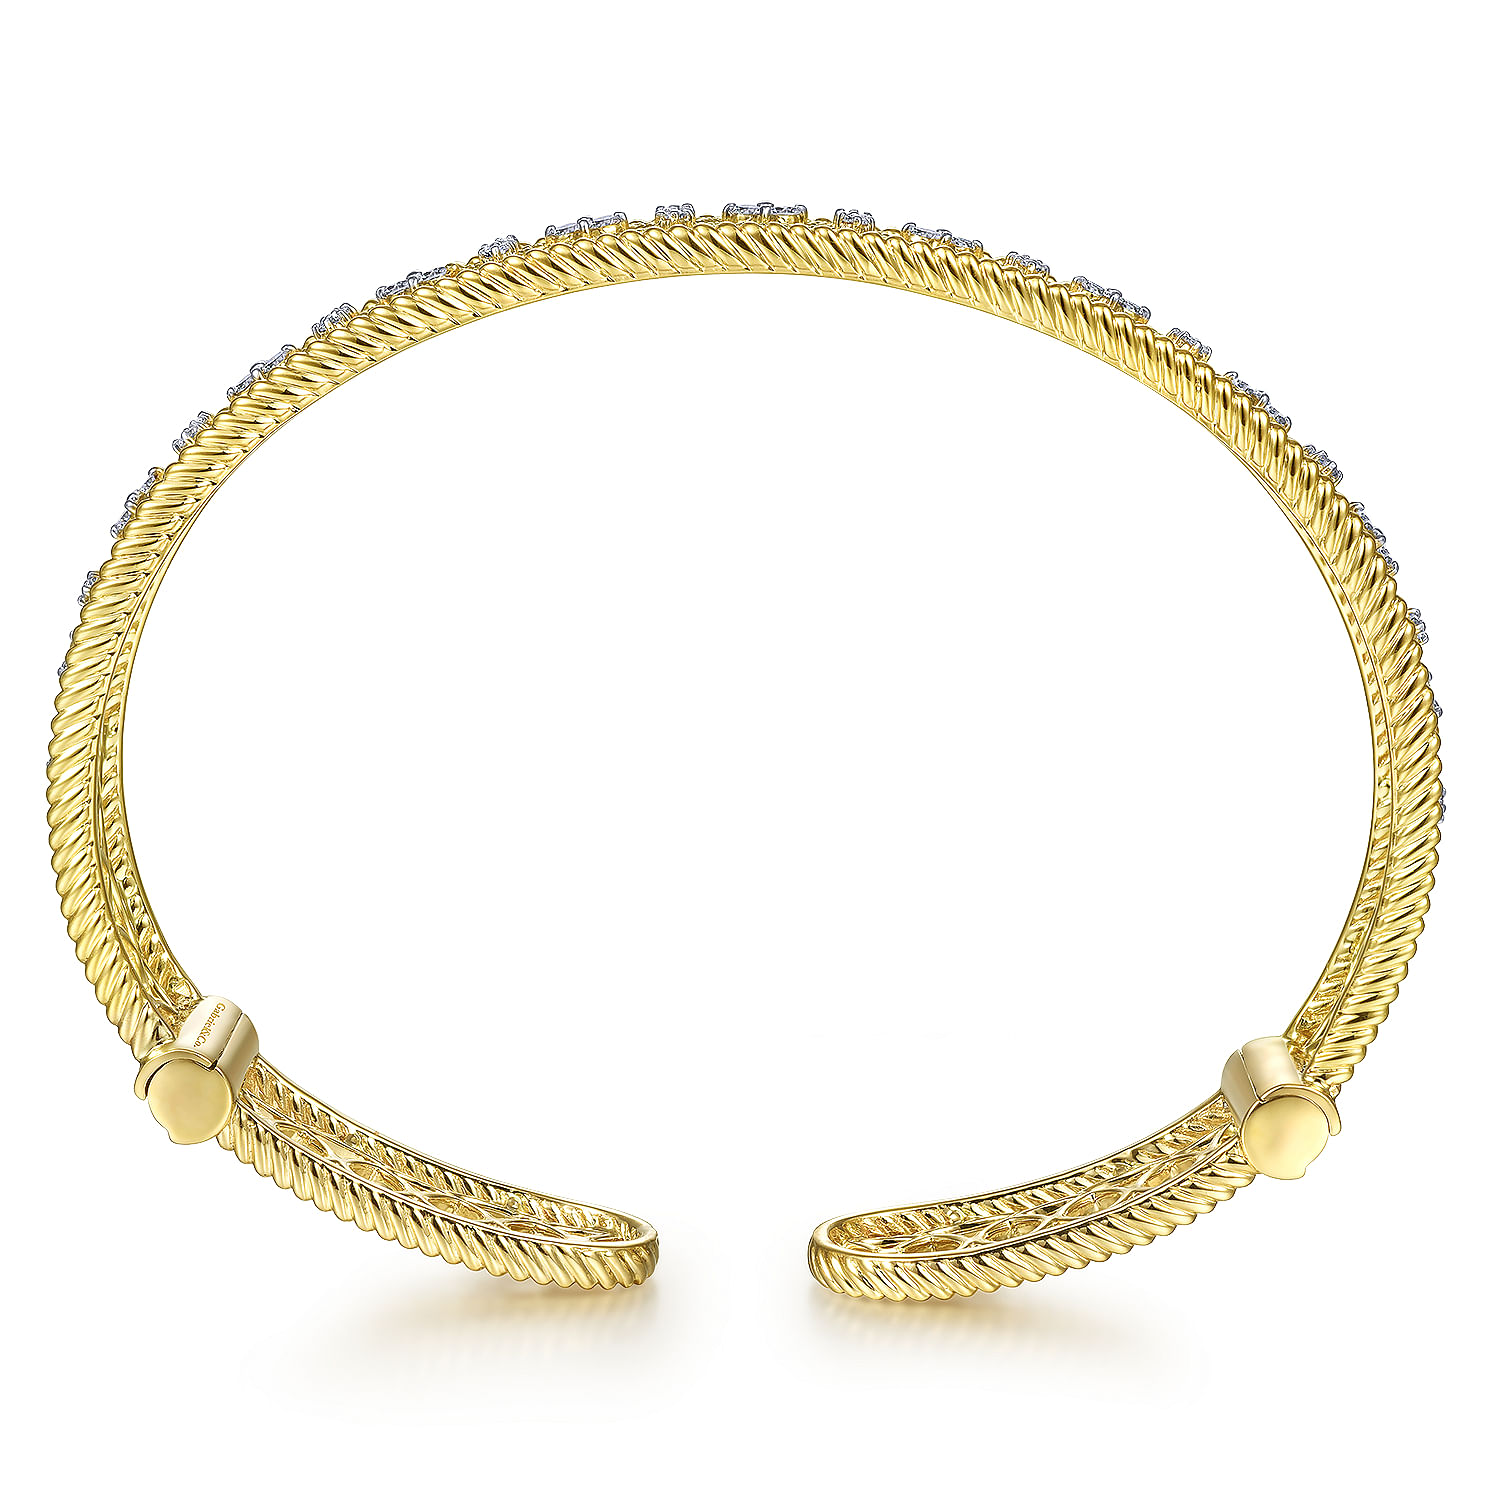 Vintage Inspired 14K Yellow Gold Filigree Diamond Cuff Bracelet